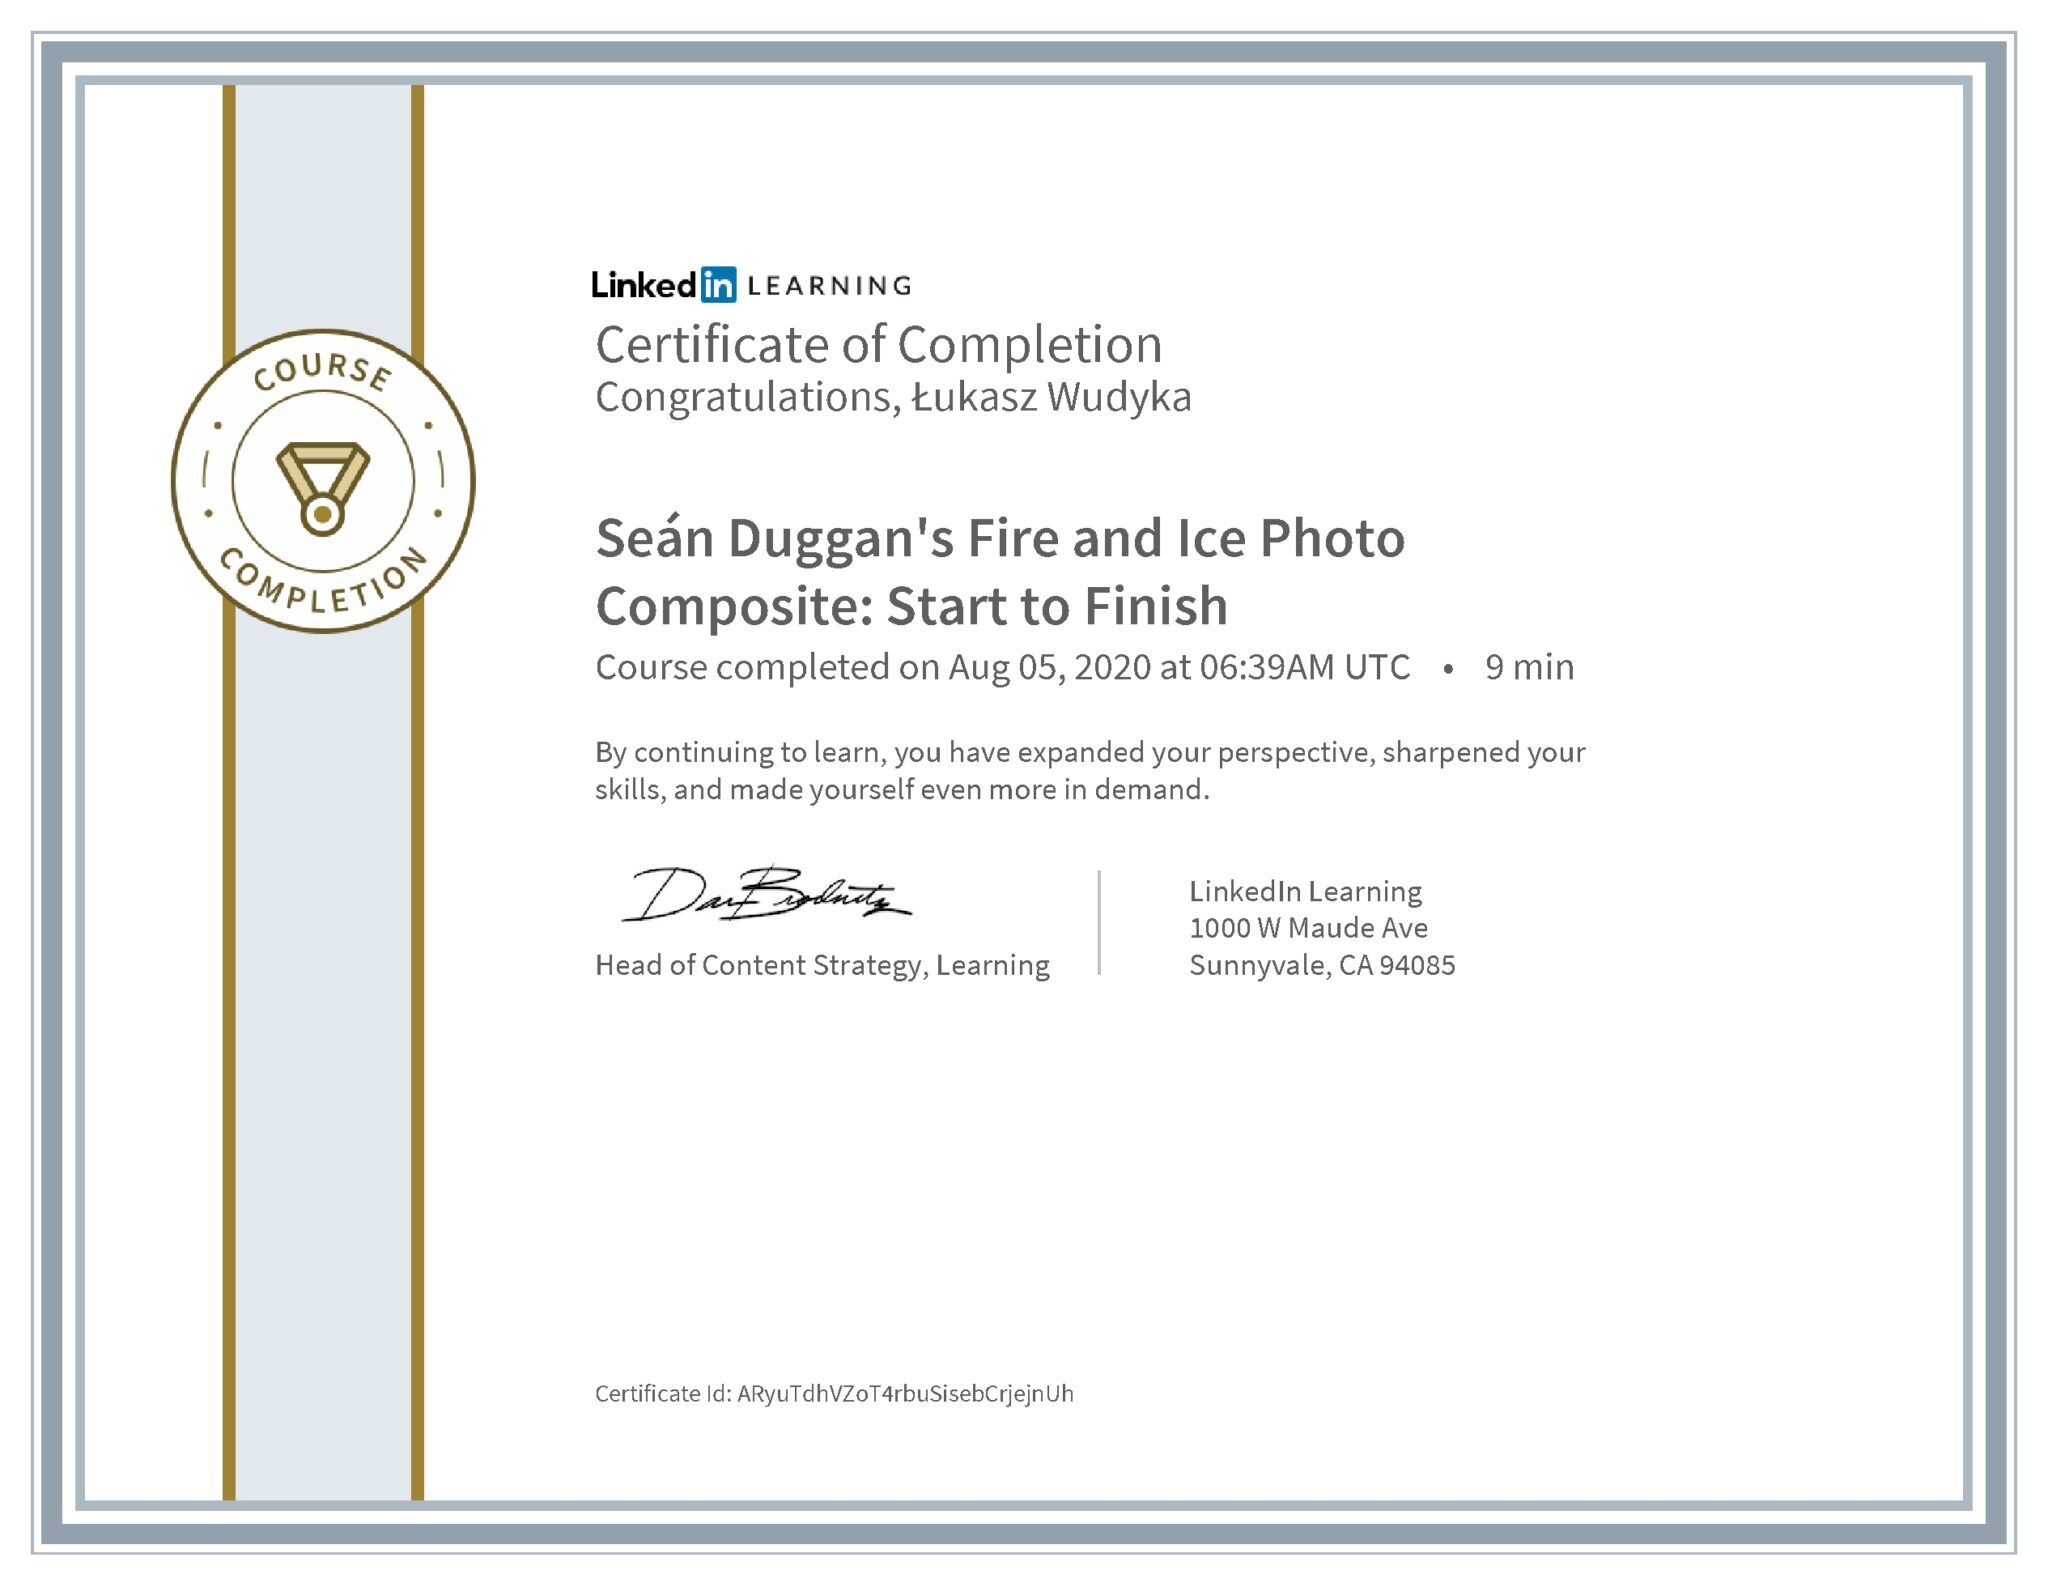 Łukasz Wudyka certyfikat LinkedIn Seán Duggan's Fire and Ice Photo Composite: Start to Finish